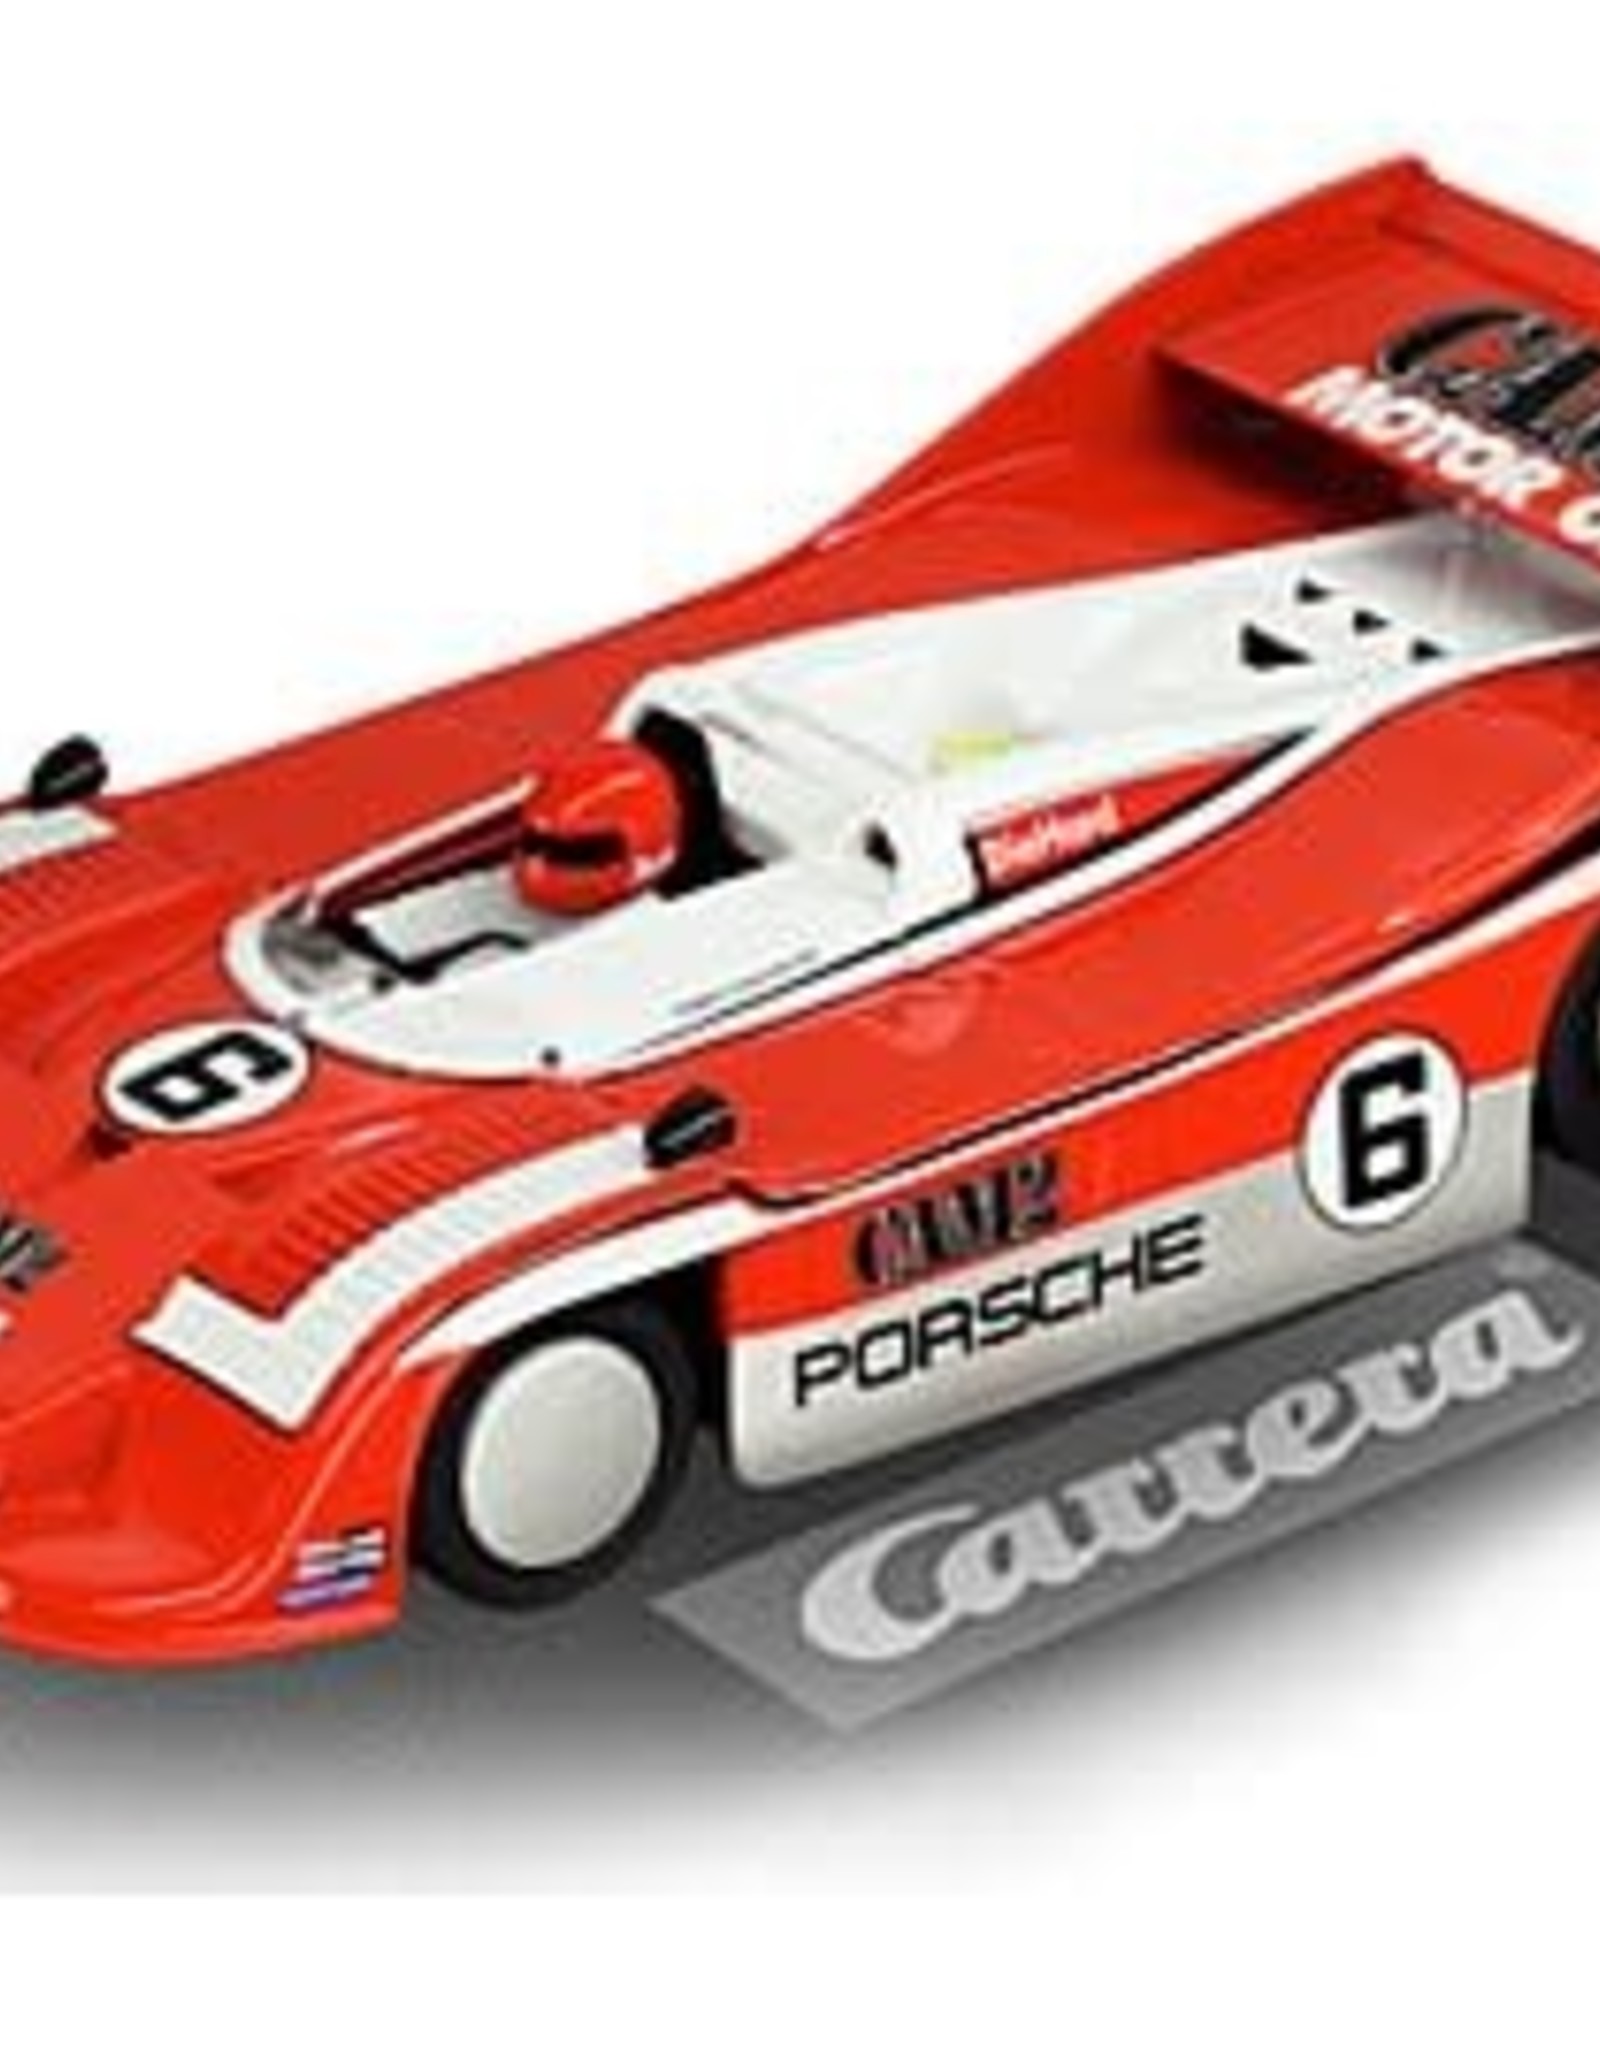 carrera CAR30522 Porsche 917/30 CAM 2 '74, Digital 1/32